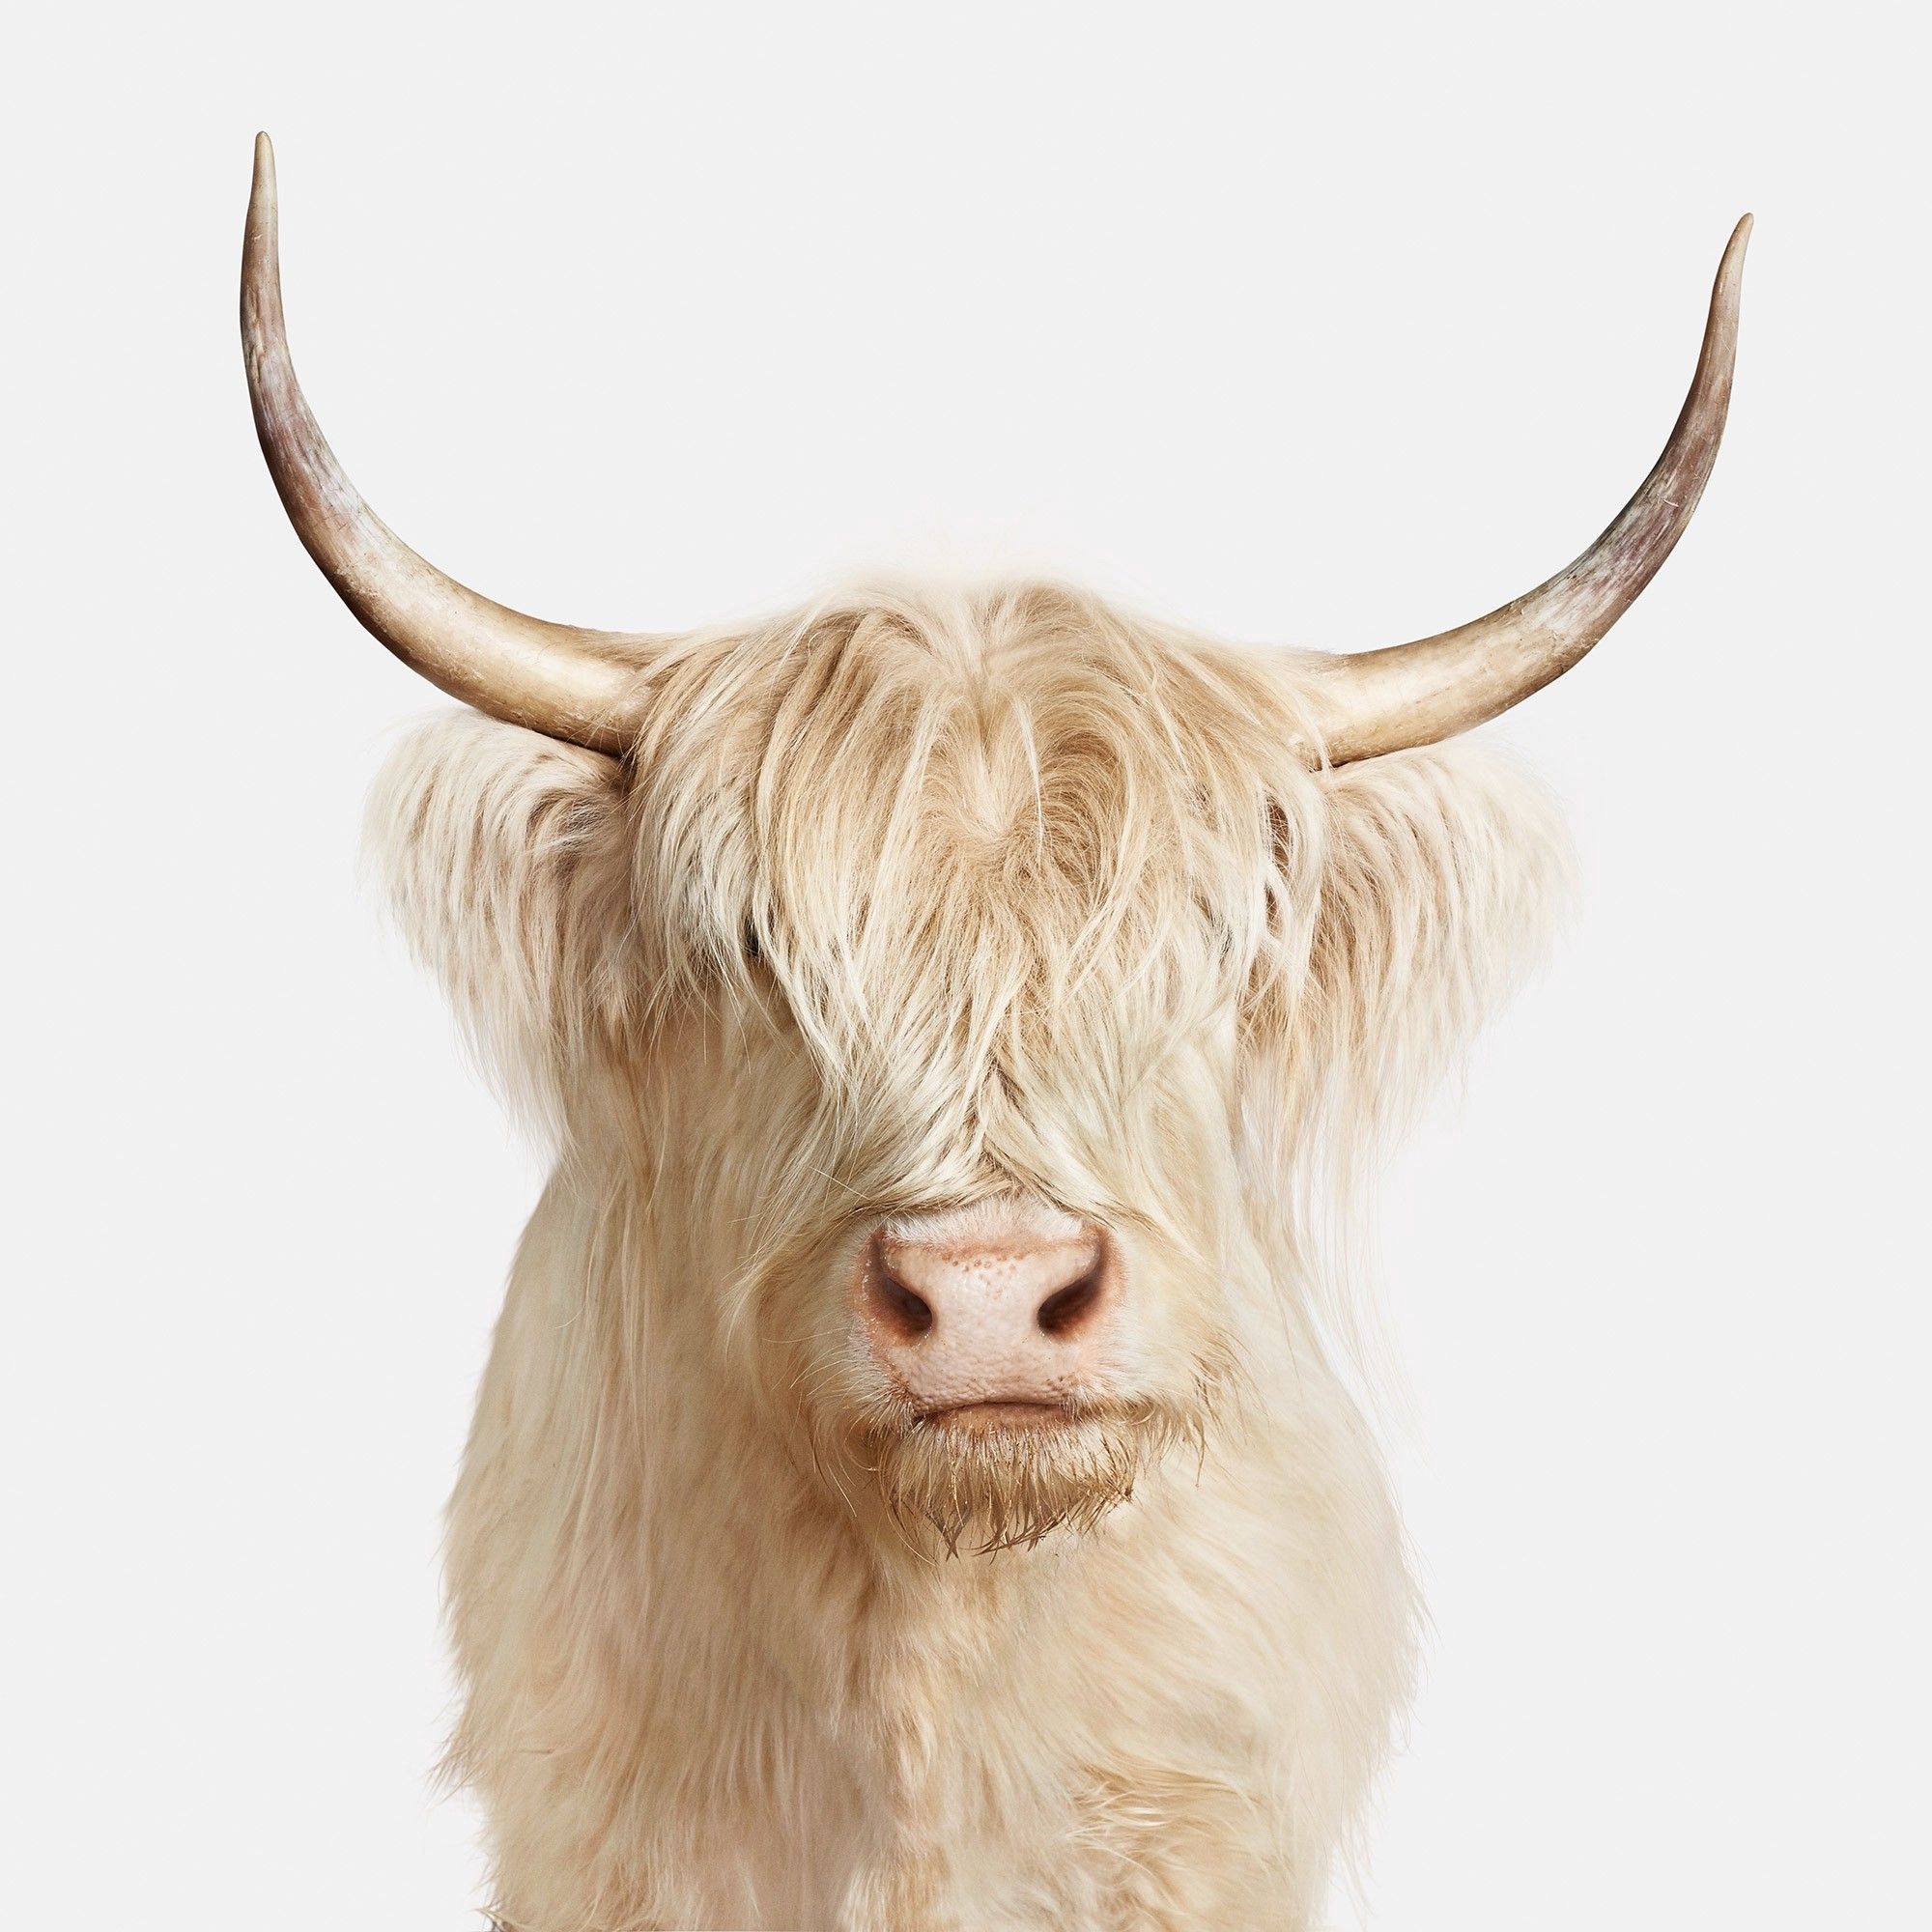 Fluffy cows, iPhone wallpaper ideas, Unique visuals, Animal cuteness, 2000x2000 HD Handy